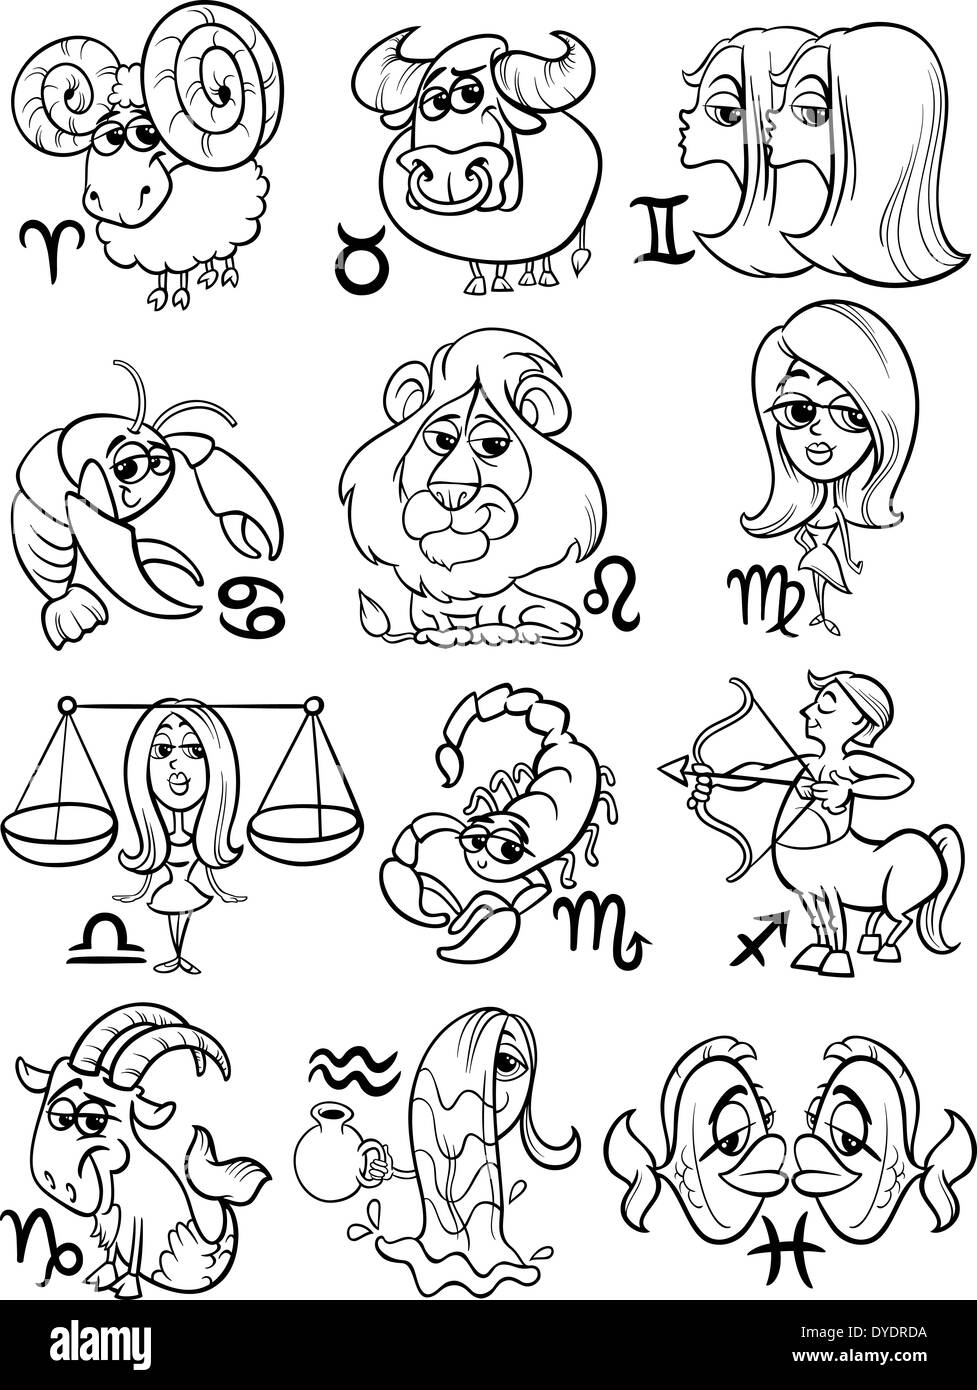 Black and White Cartoon Illustration of All Horoscope Zodiac Signs Set Stock Photo